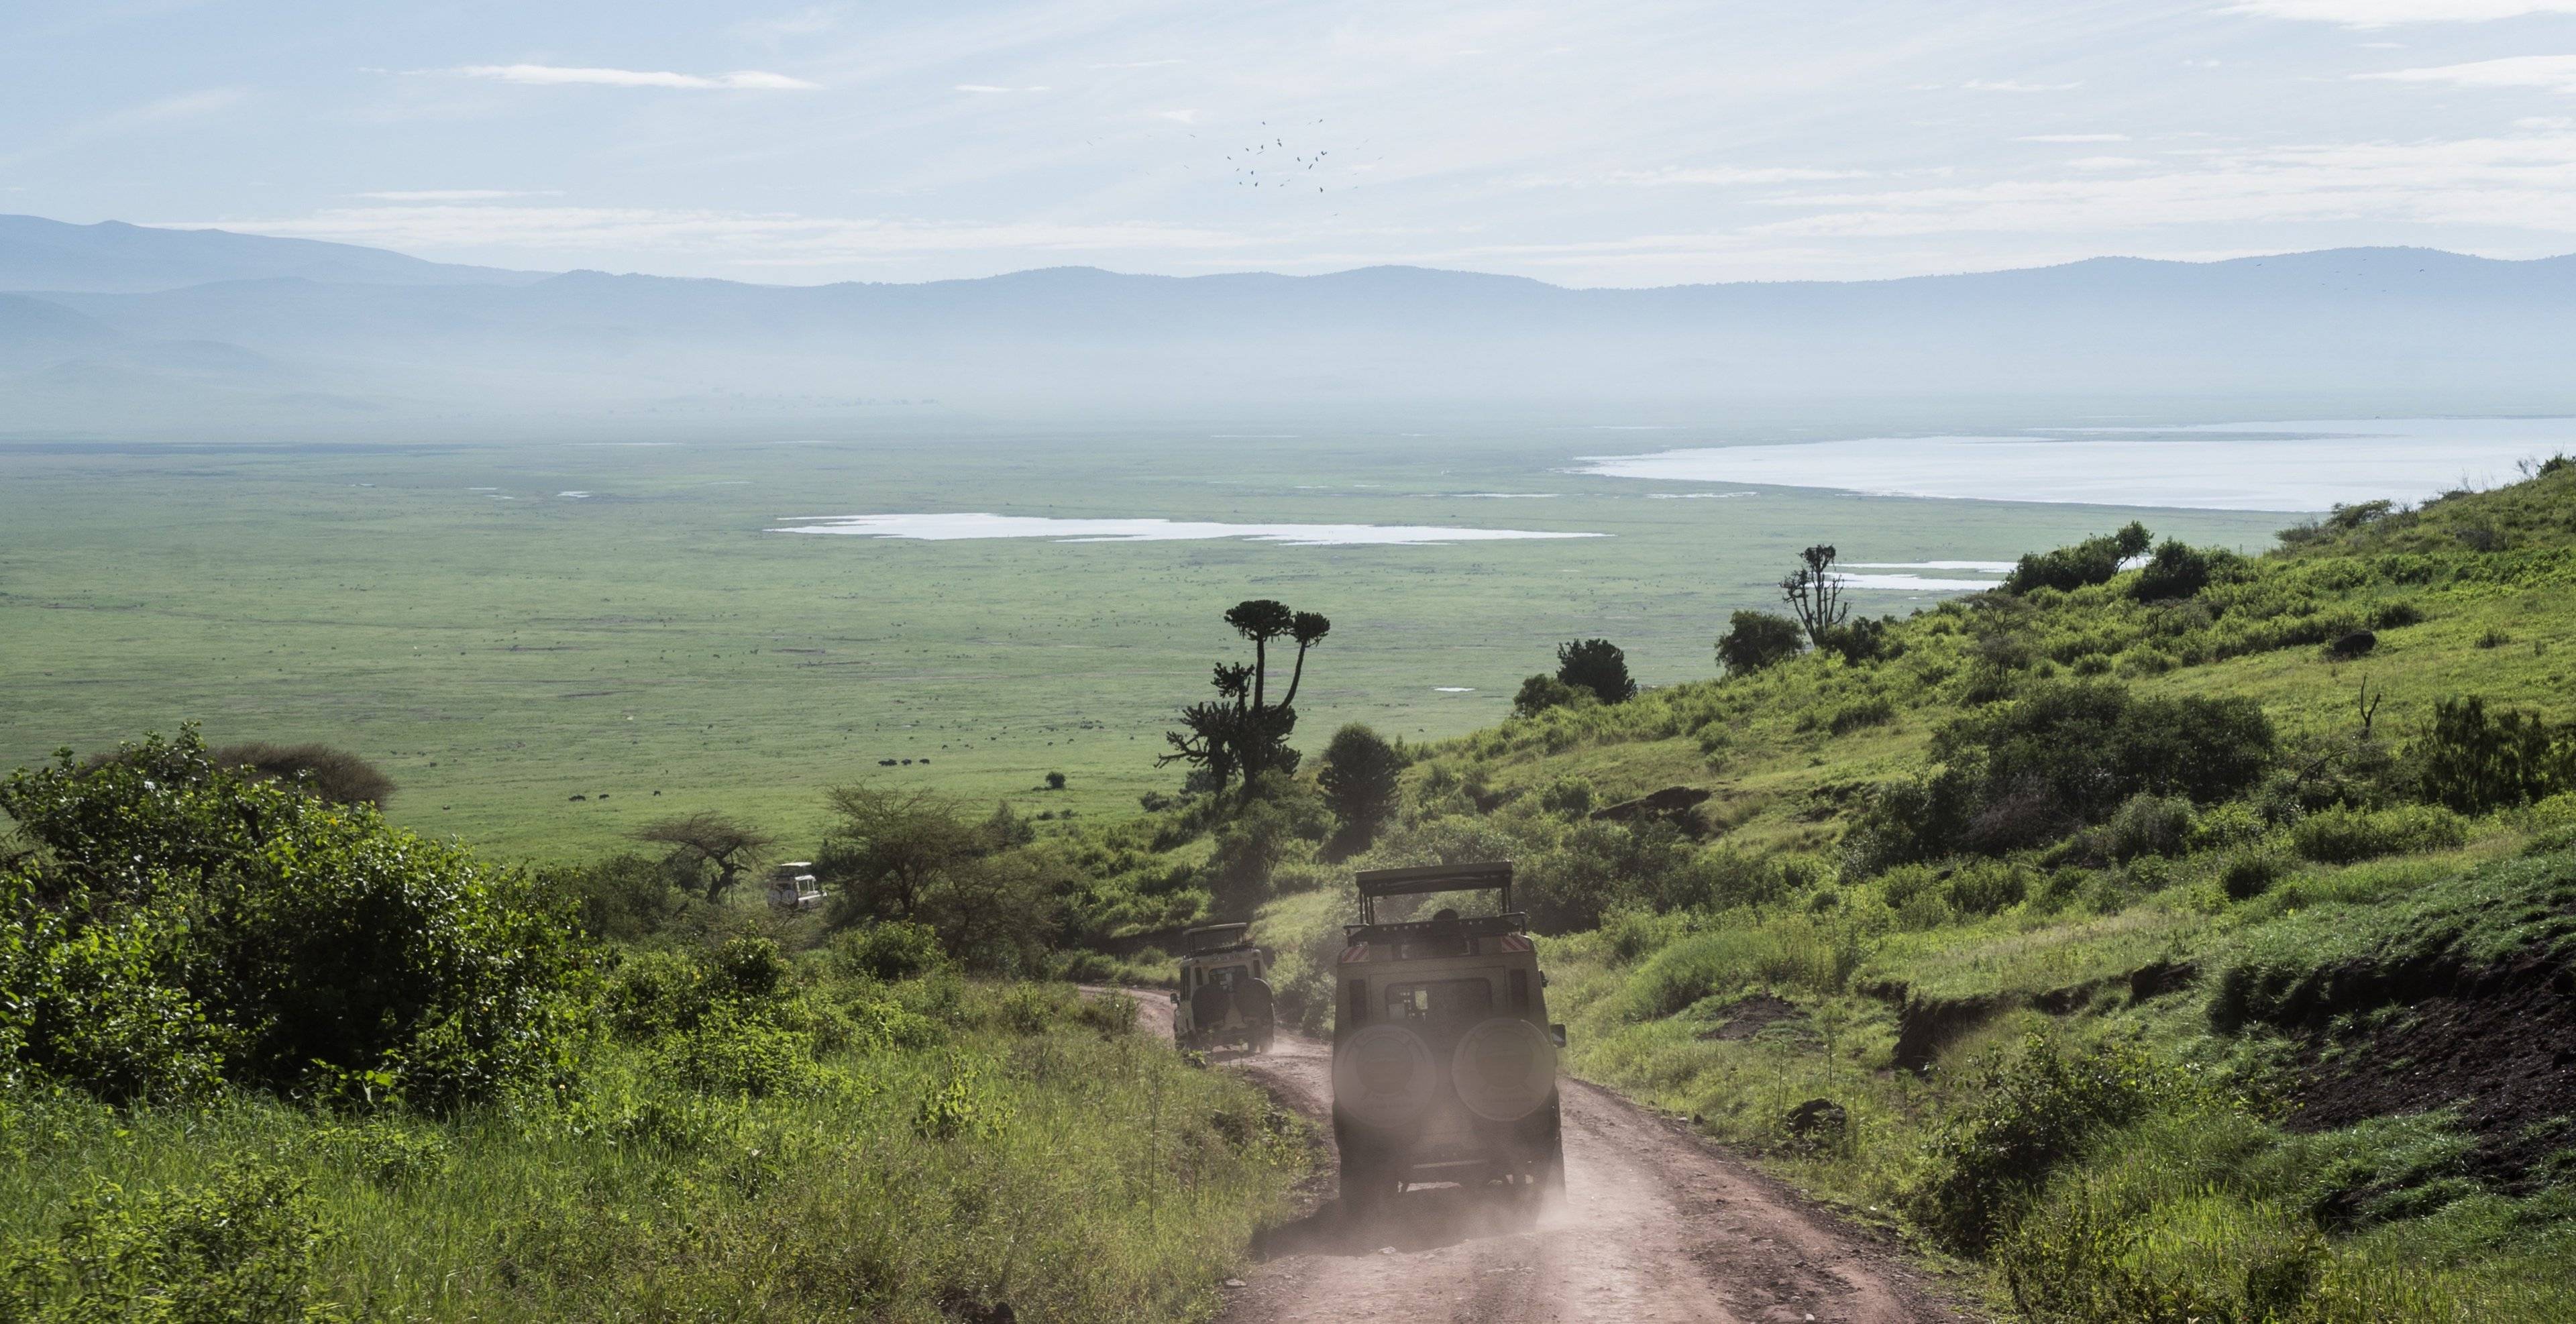 Les trésors naturels du cratère Ngorongoro